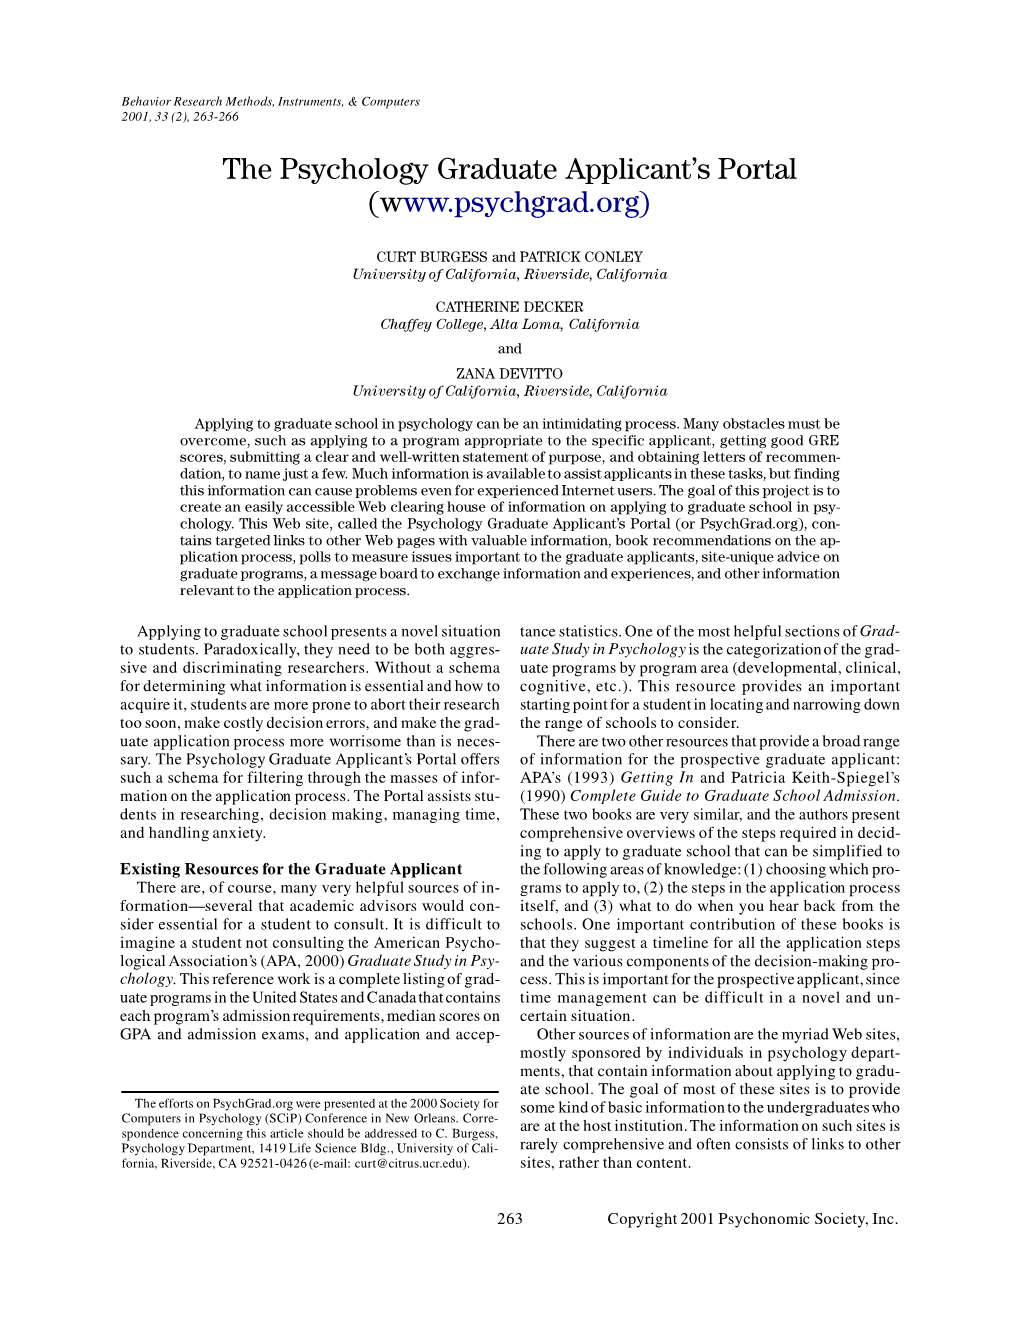 The Psychology Graduate Applicant's Portal (